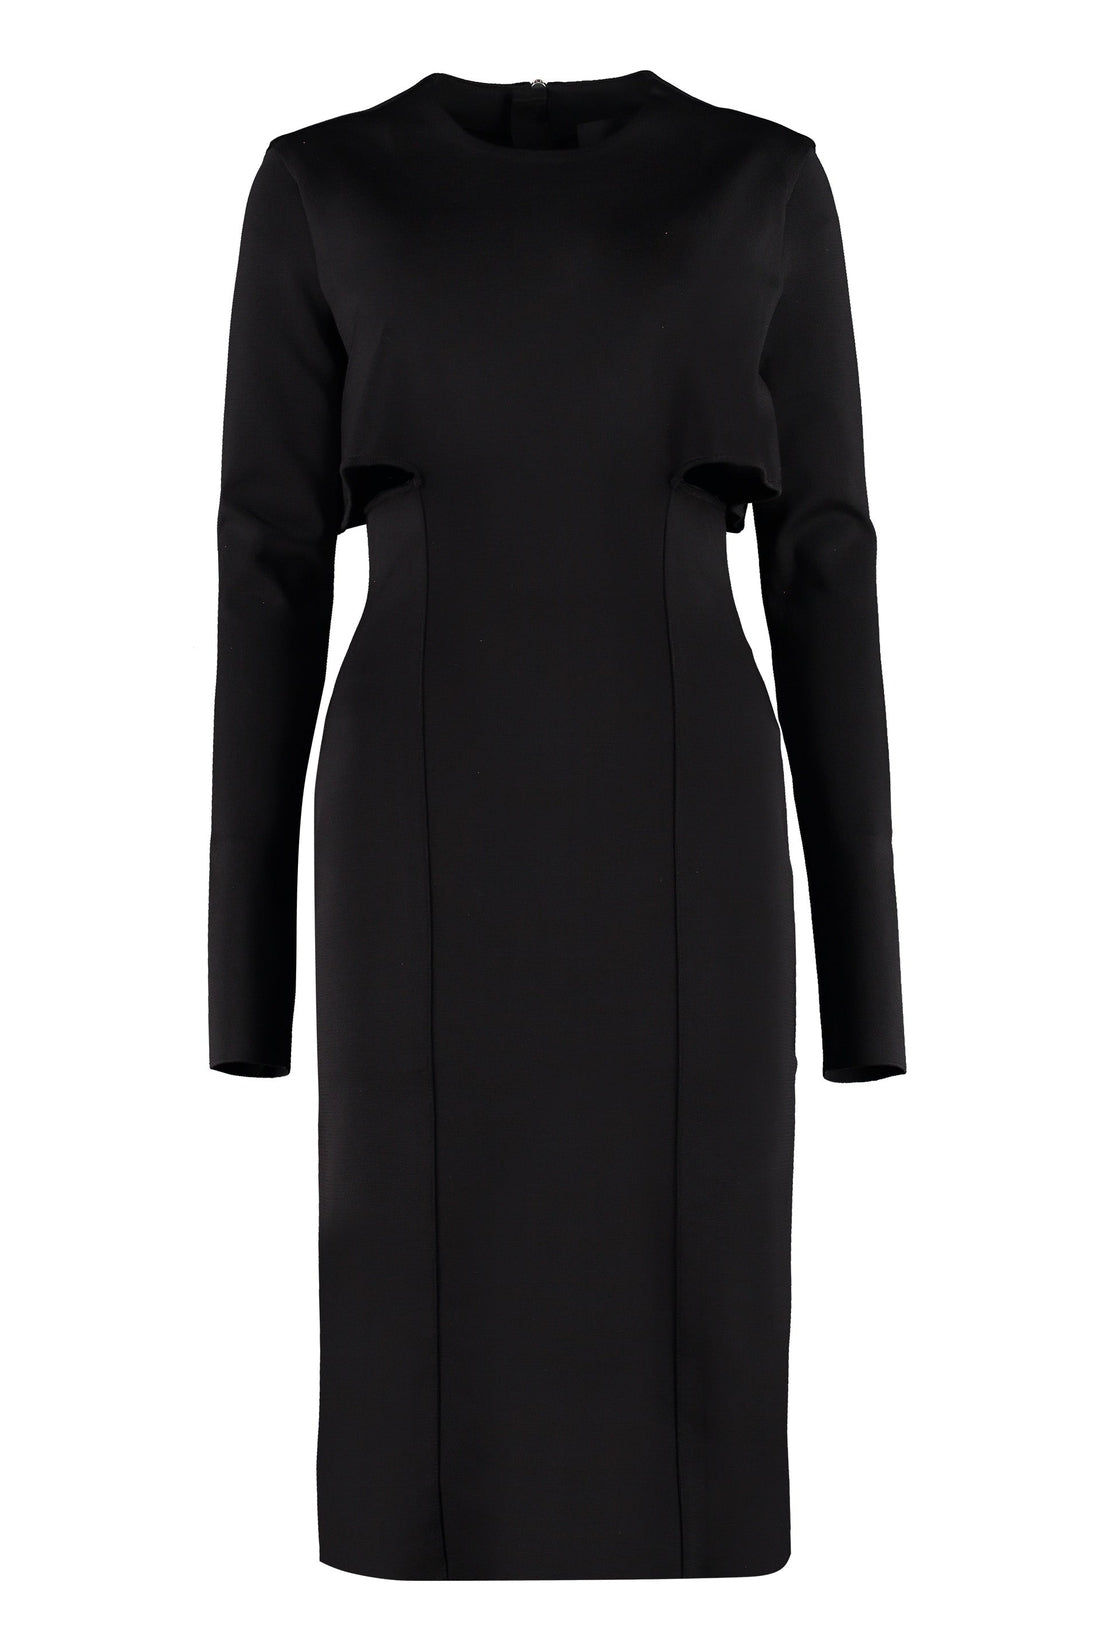 Givenchy-OUTLET-SALE-Jersey sheath dress-ARCHIVIST